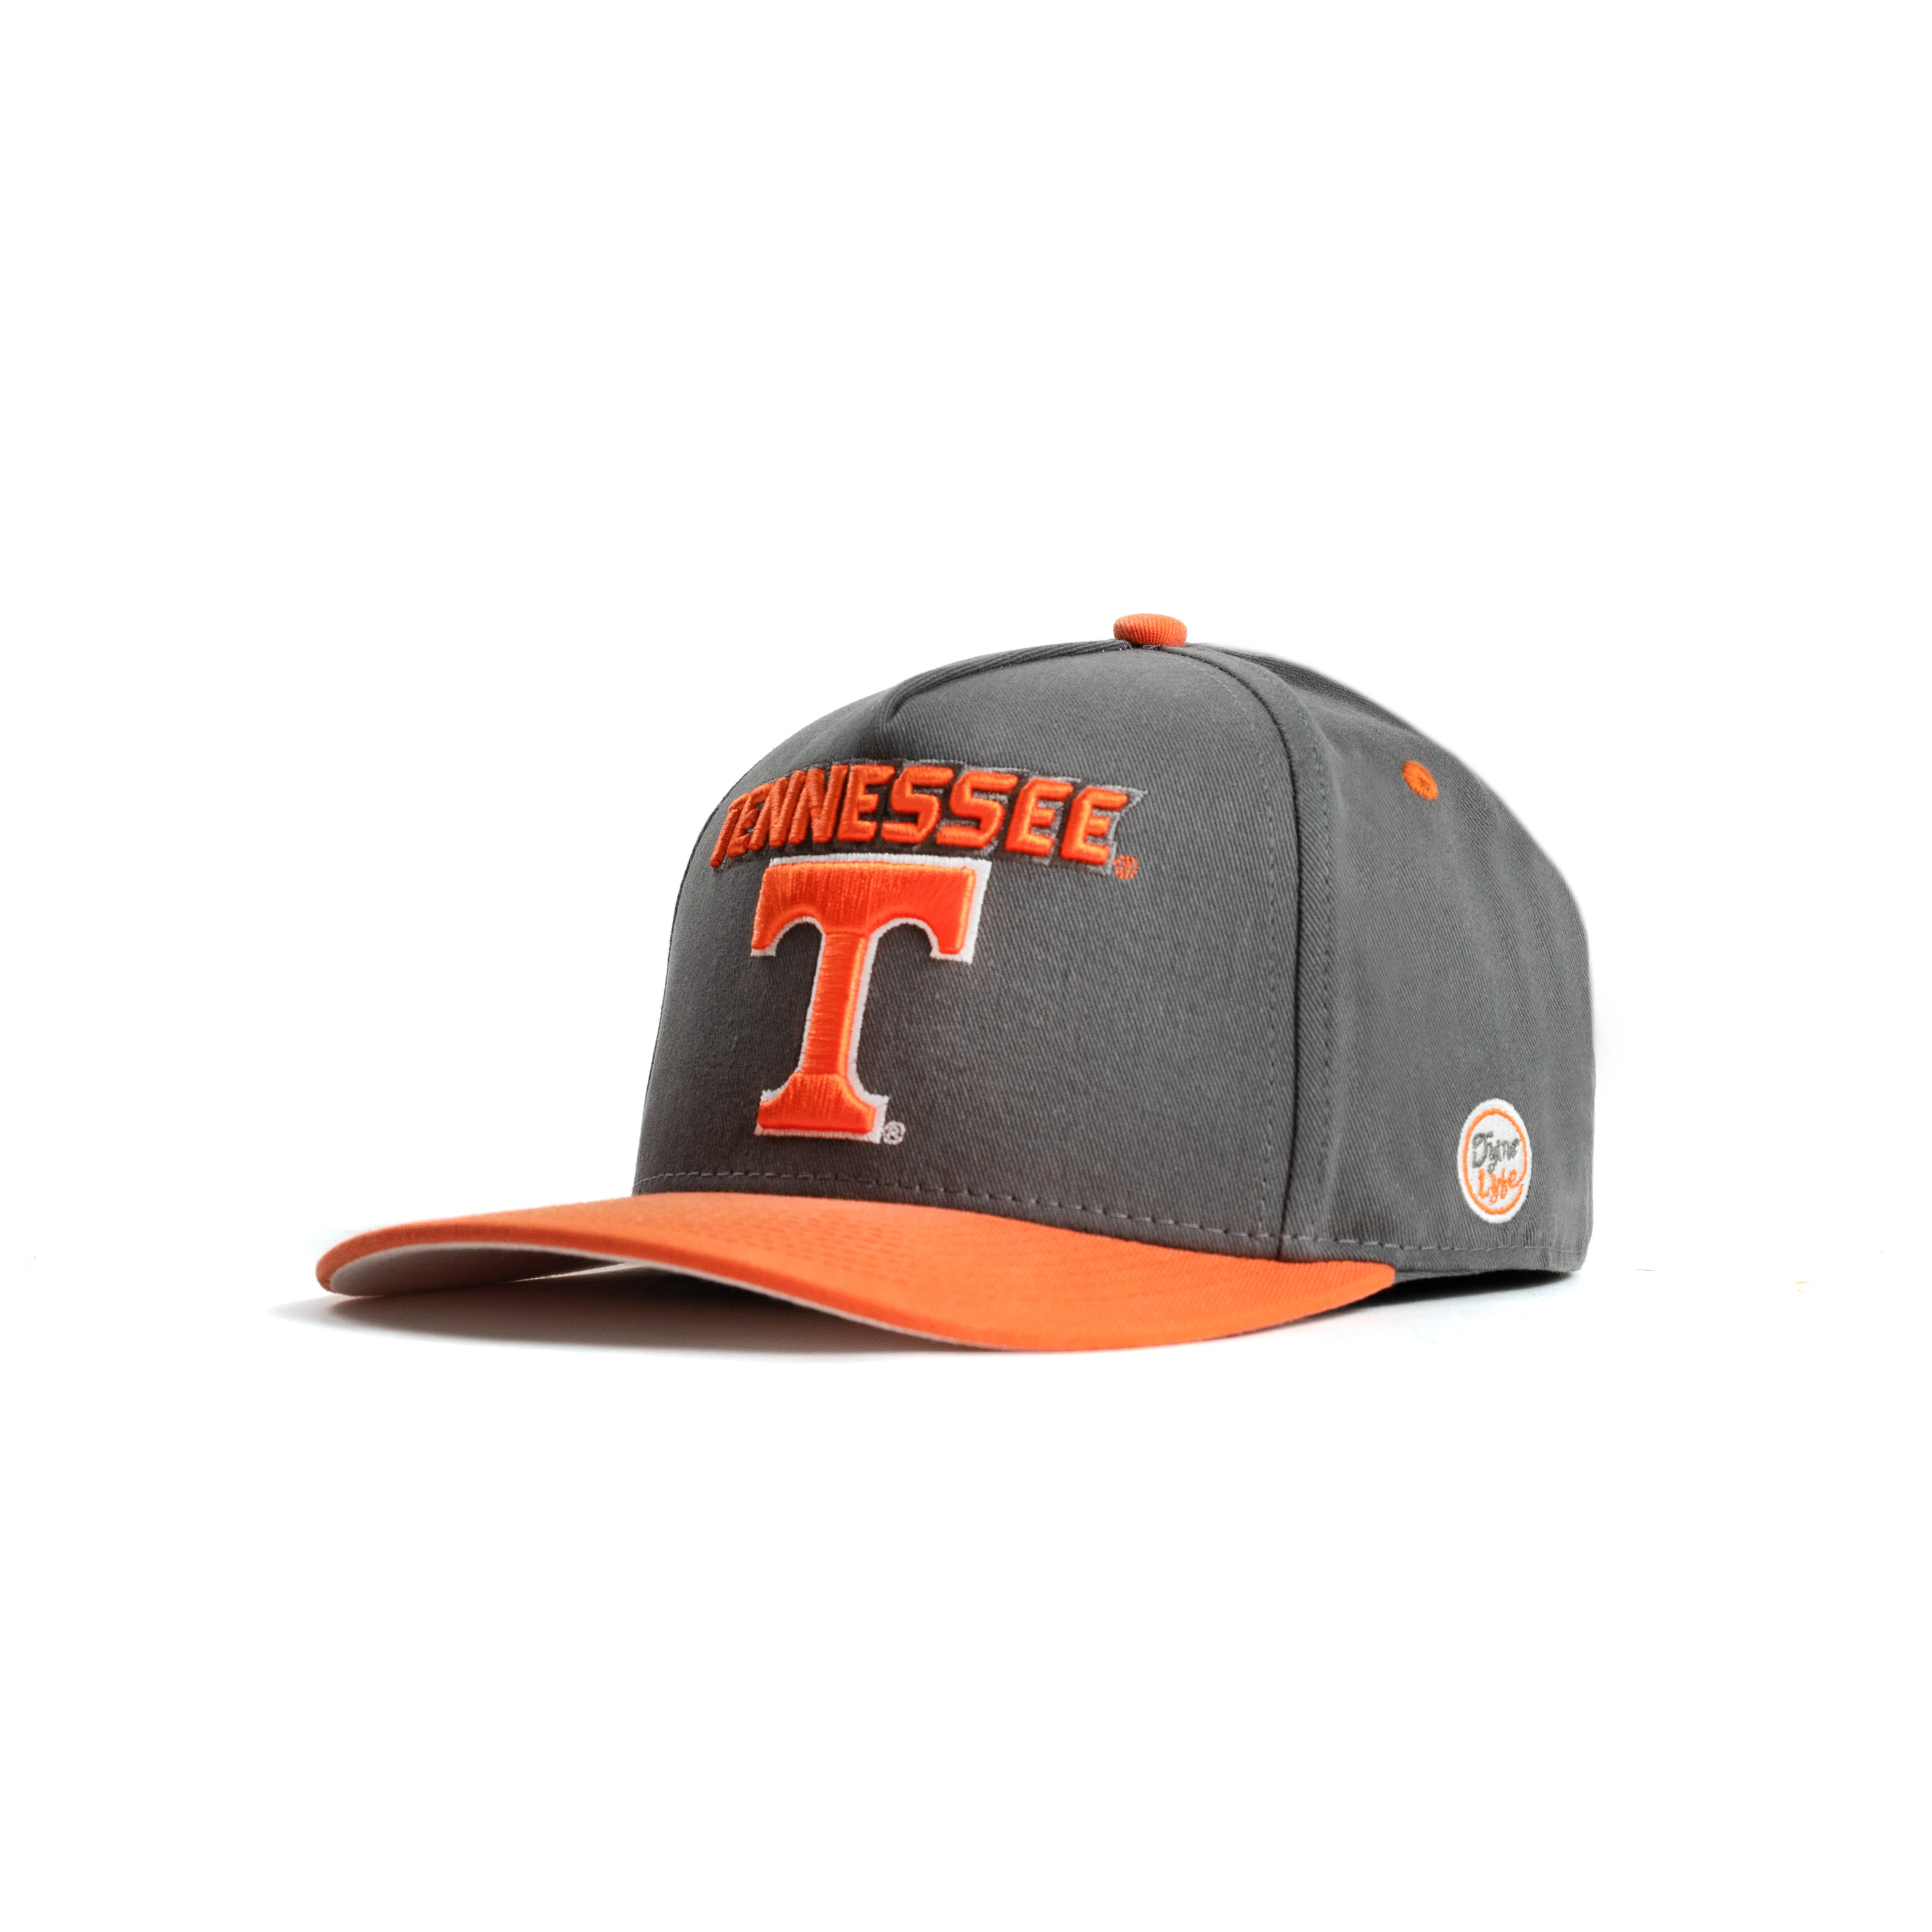 Tennessee Vols Logo Snapback